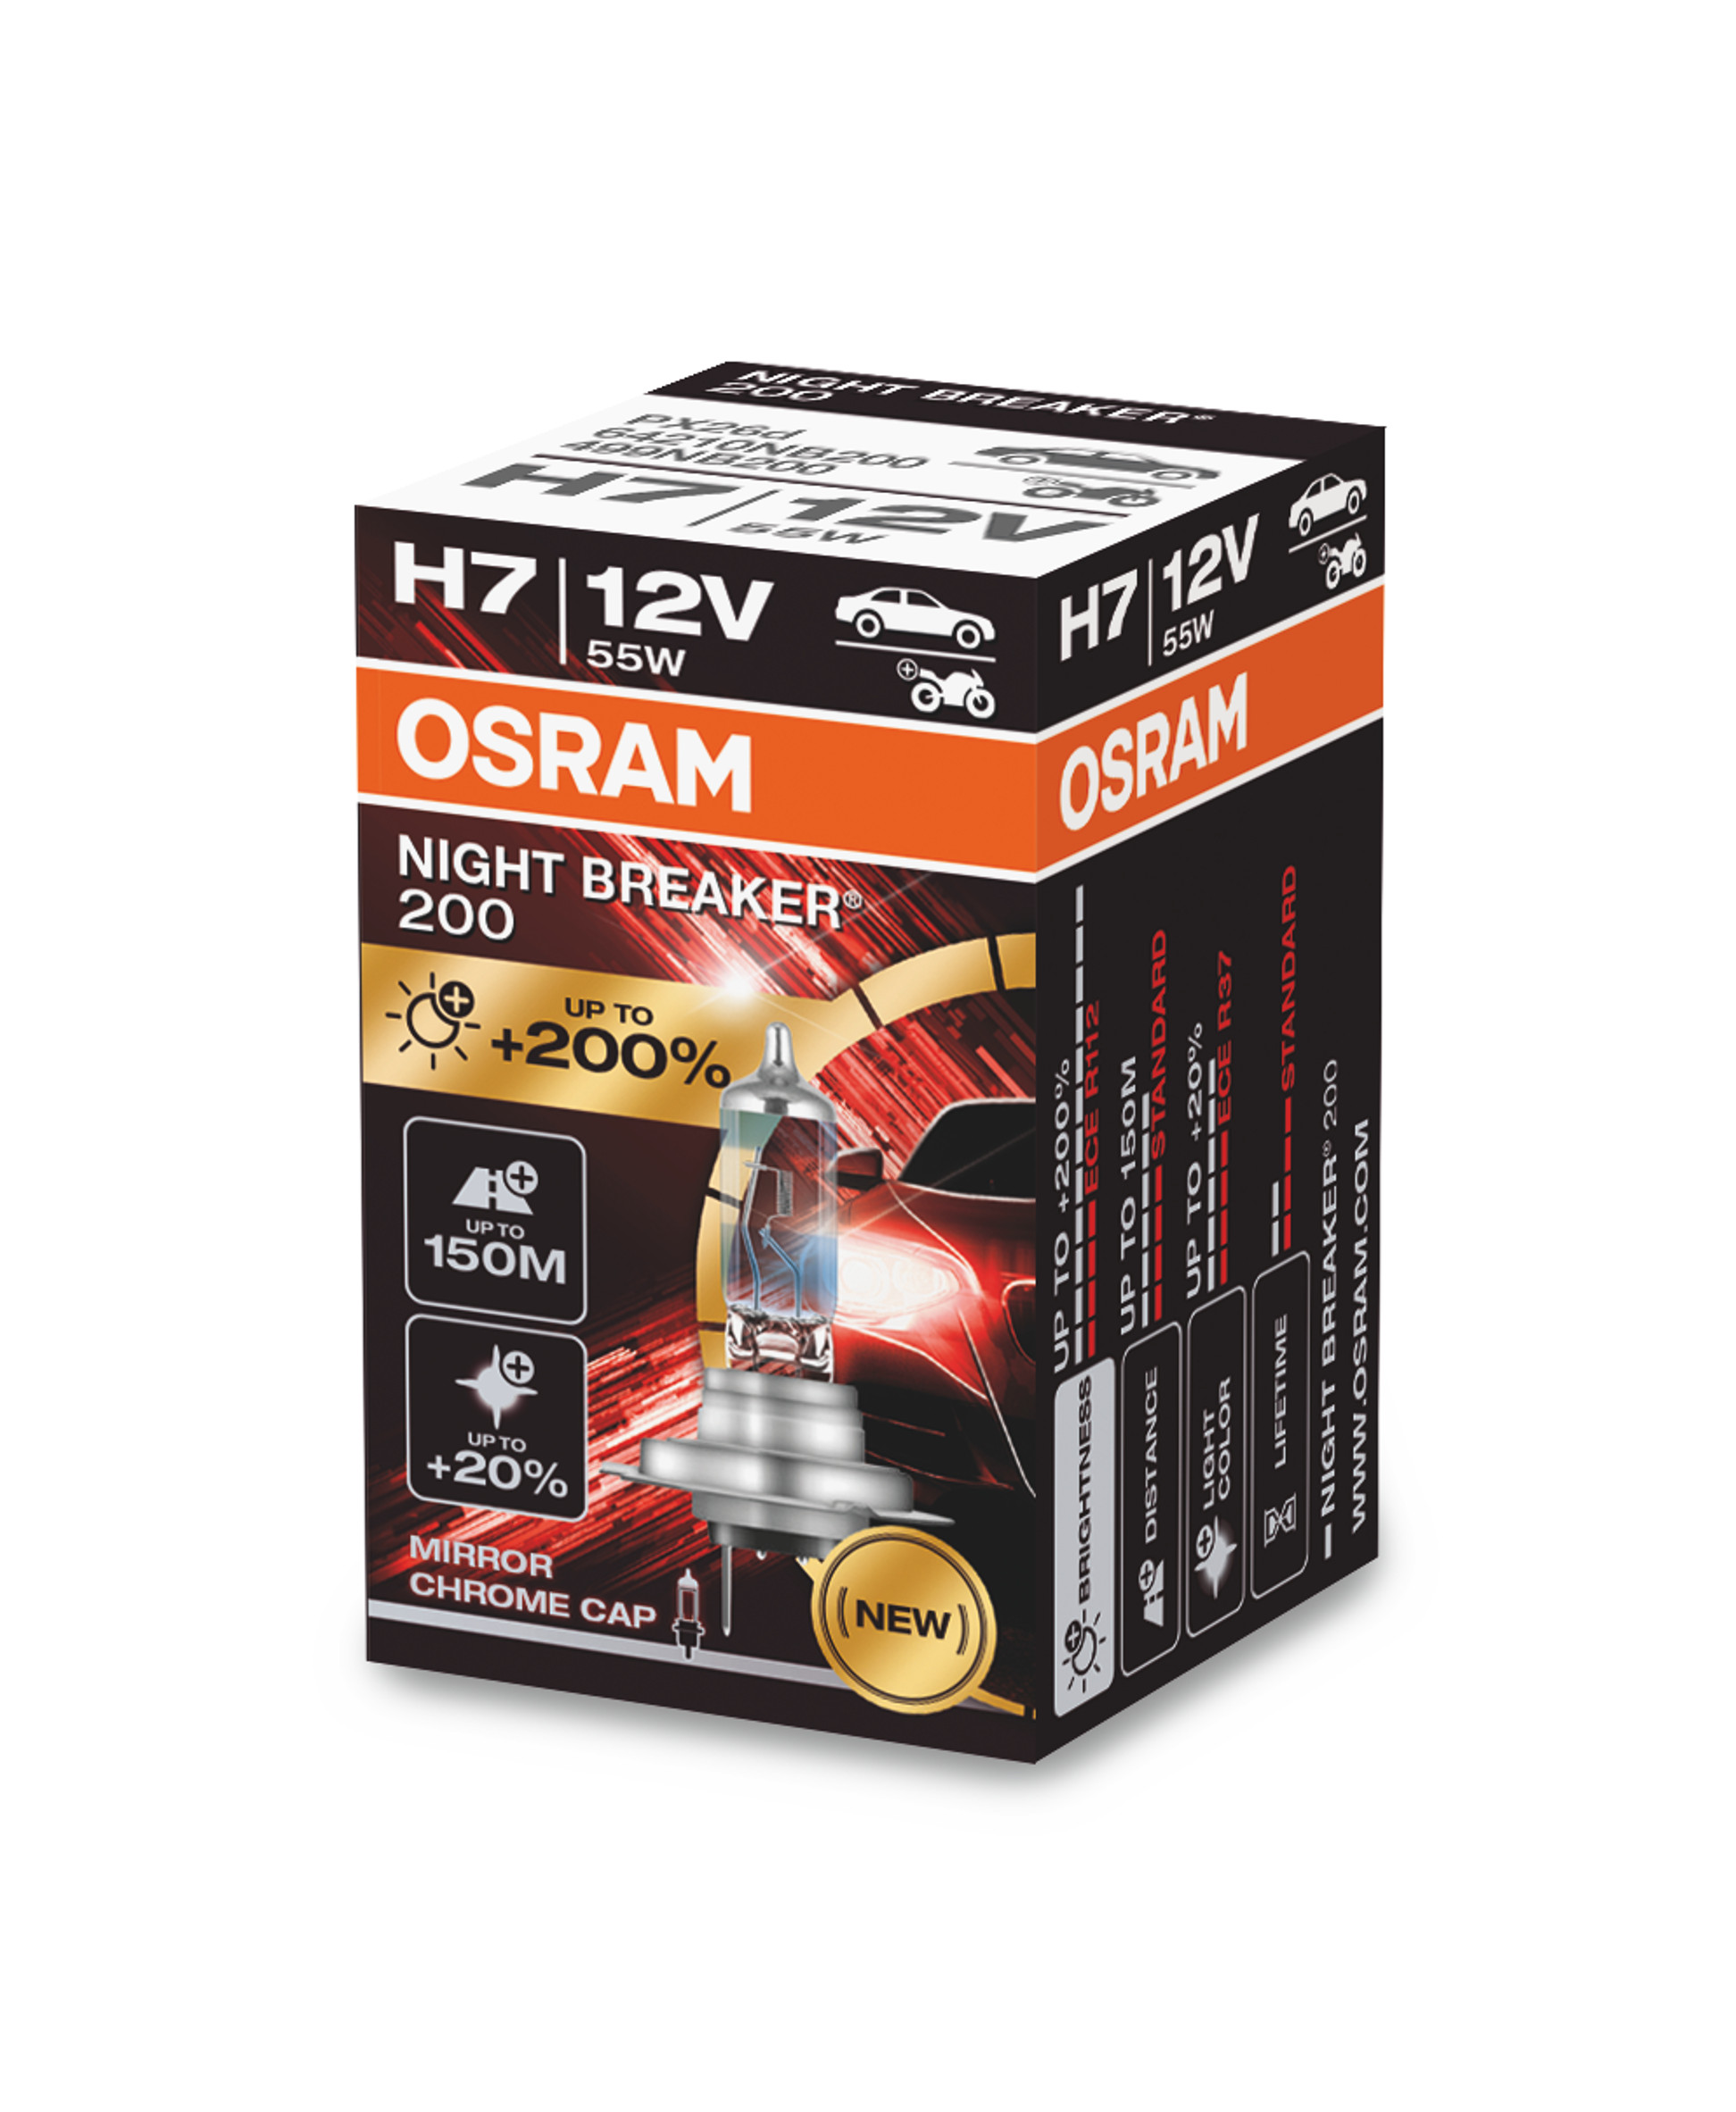 H7 12V 55W PX26d NIGHT BREAKER® 200 +200% 1St. OSRAM